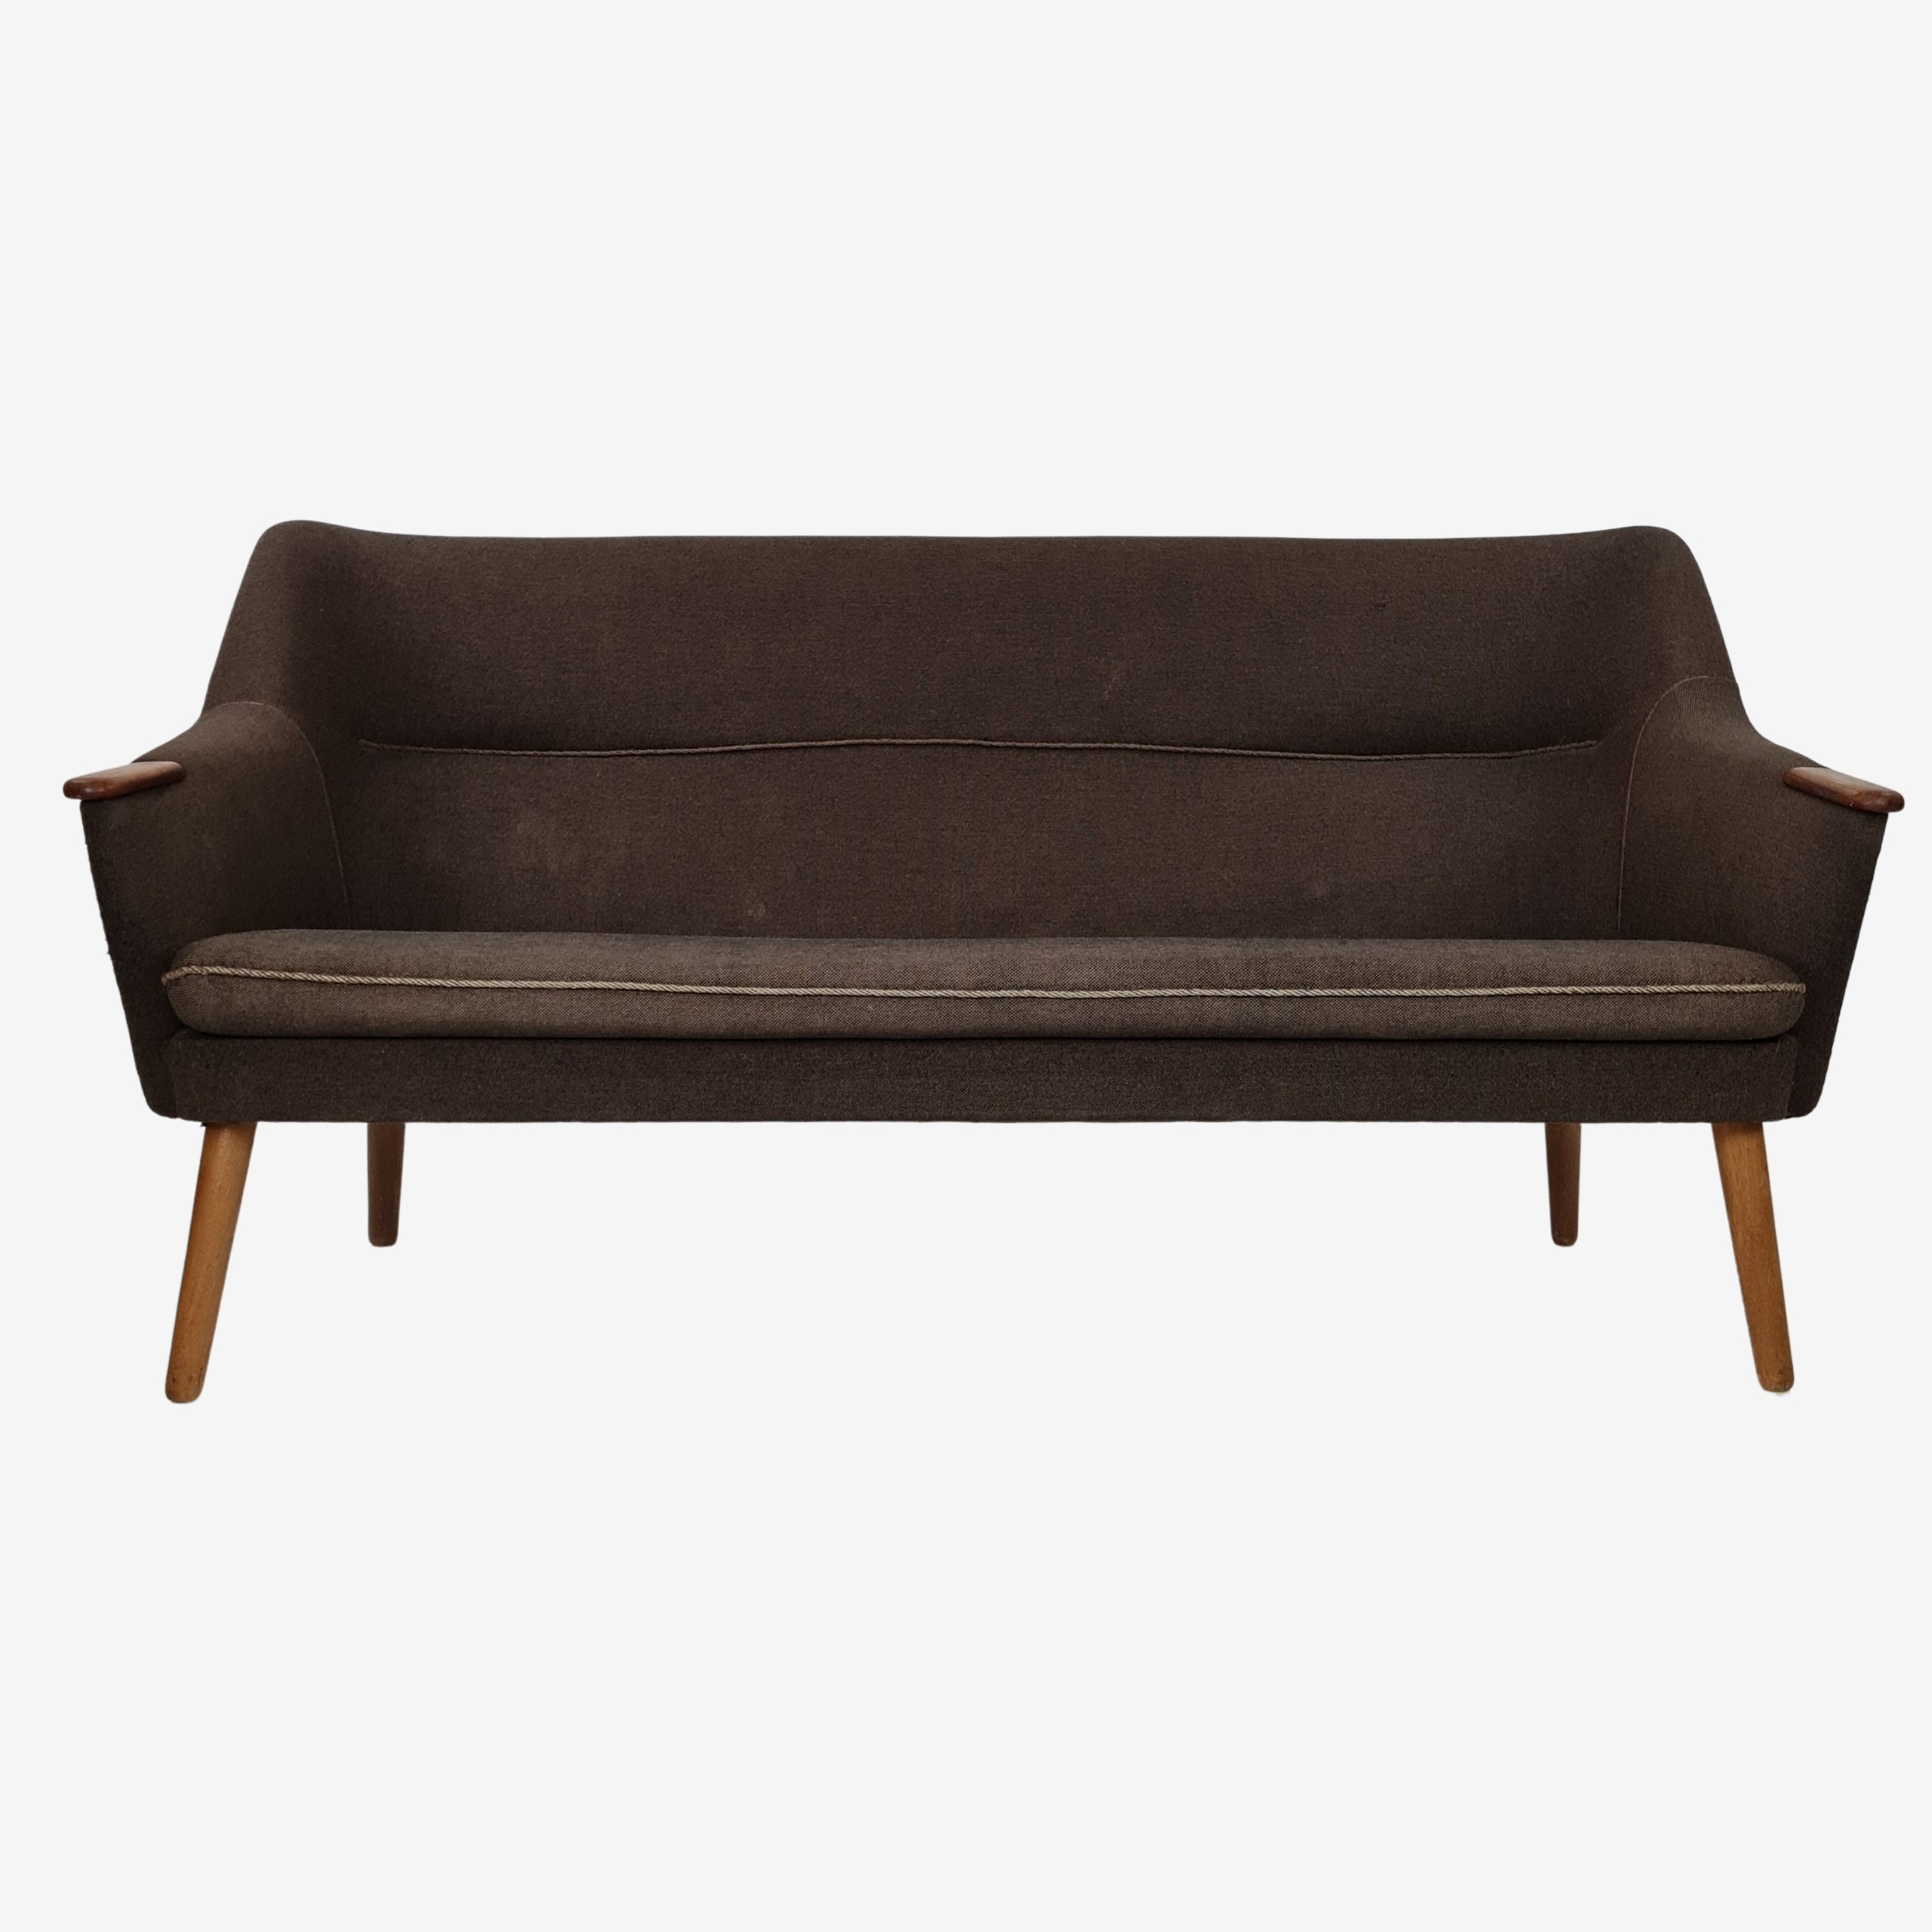 Three-person sofa with teak nails | Danish Furniture Manufacturer | Brown wool and teak